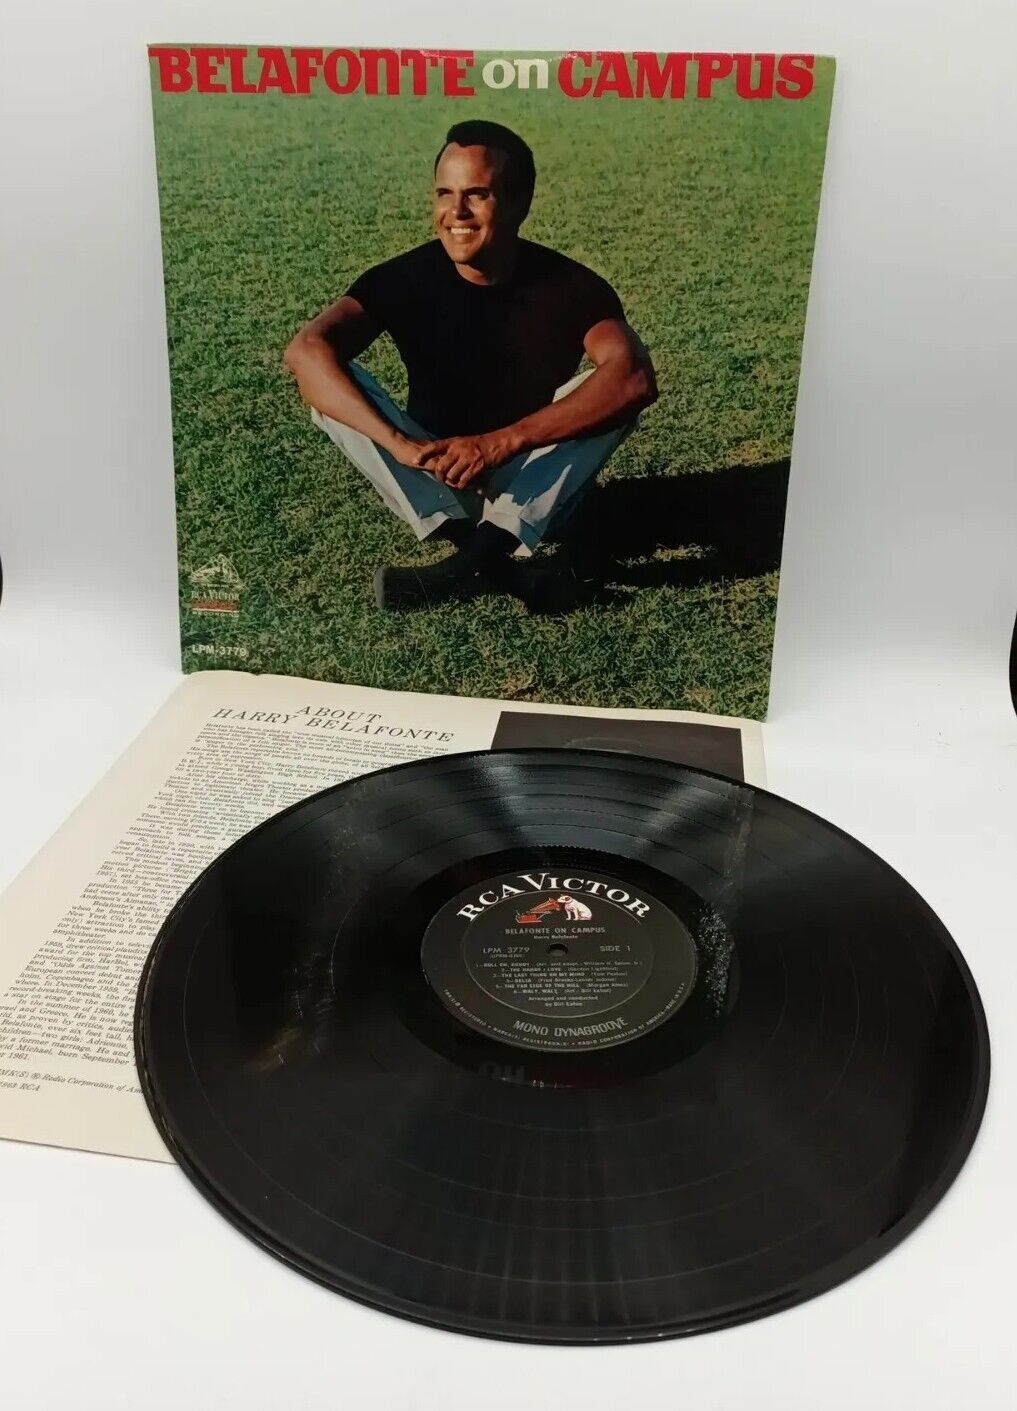 BELAFONTE ON CAMPUS HARRY BELAFONTE VINYL LP ALBUM 1967 RCA RECORDS MONO EX